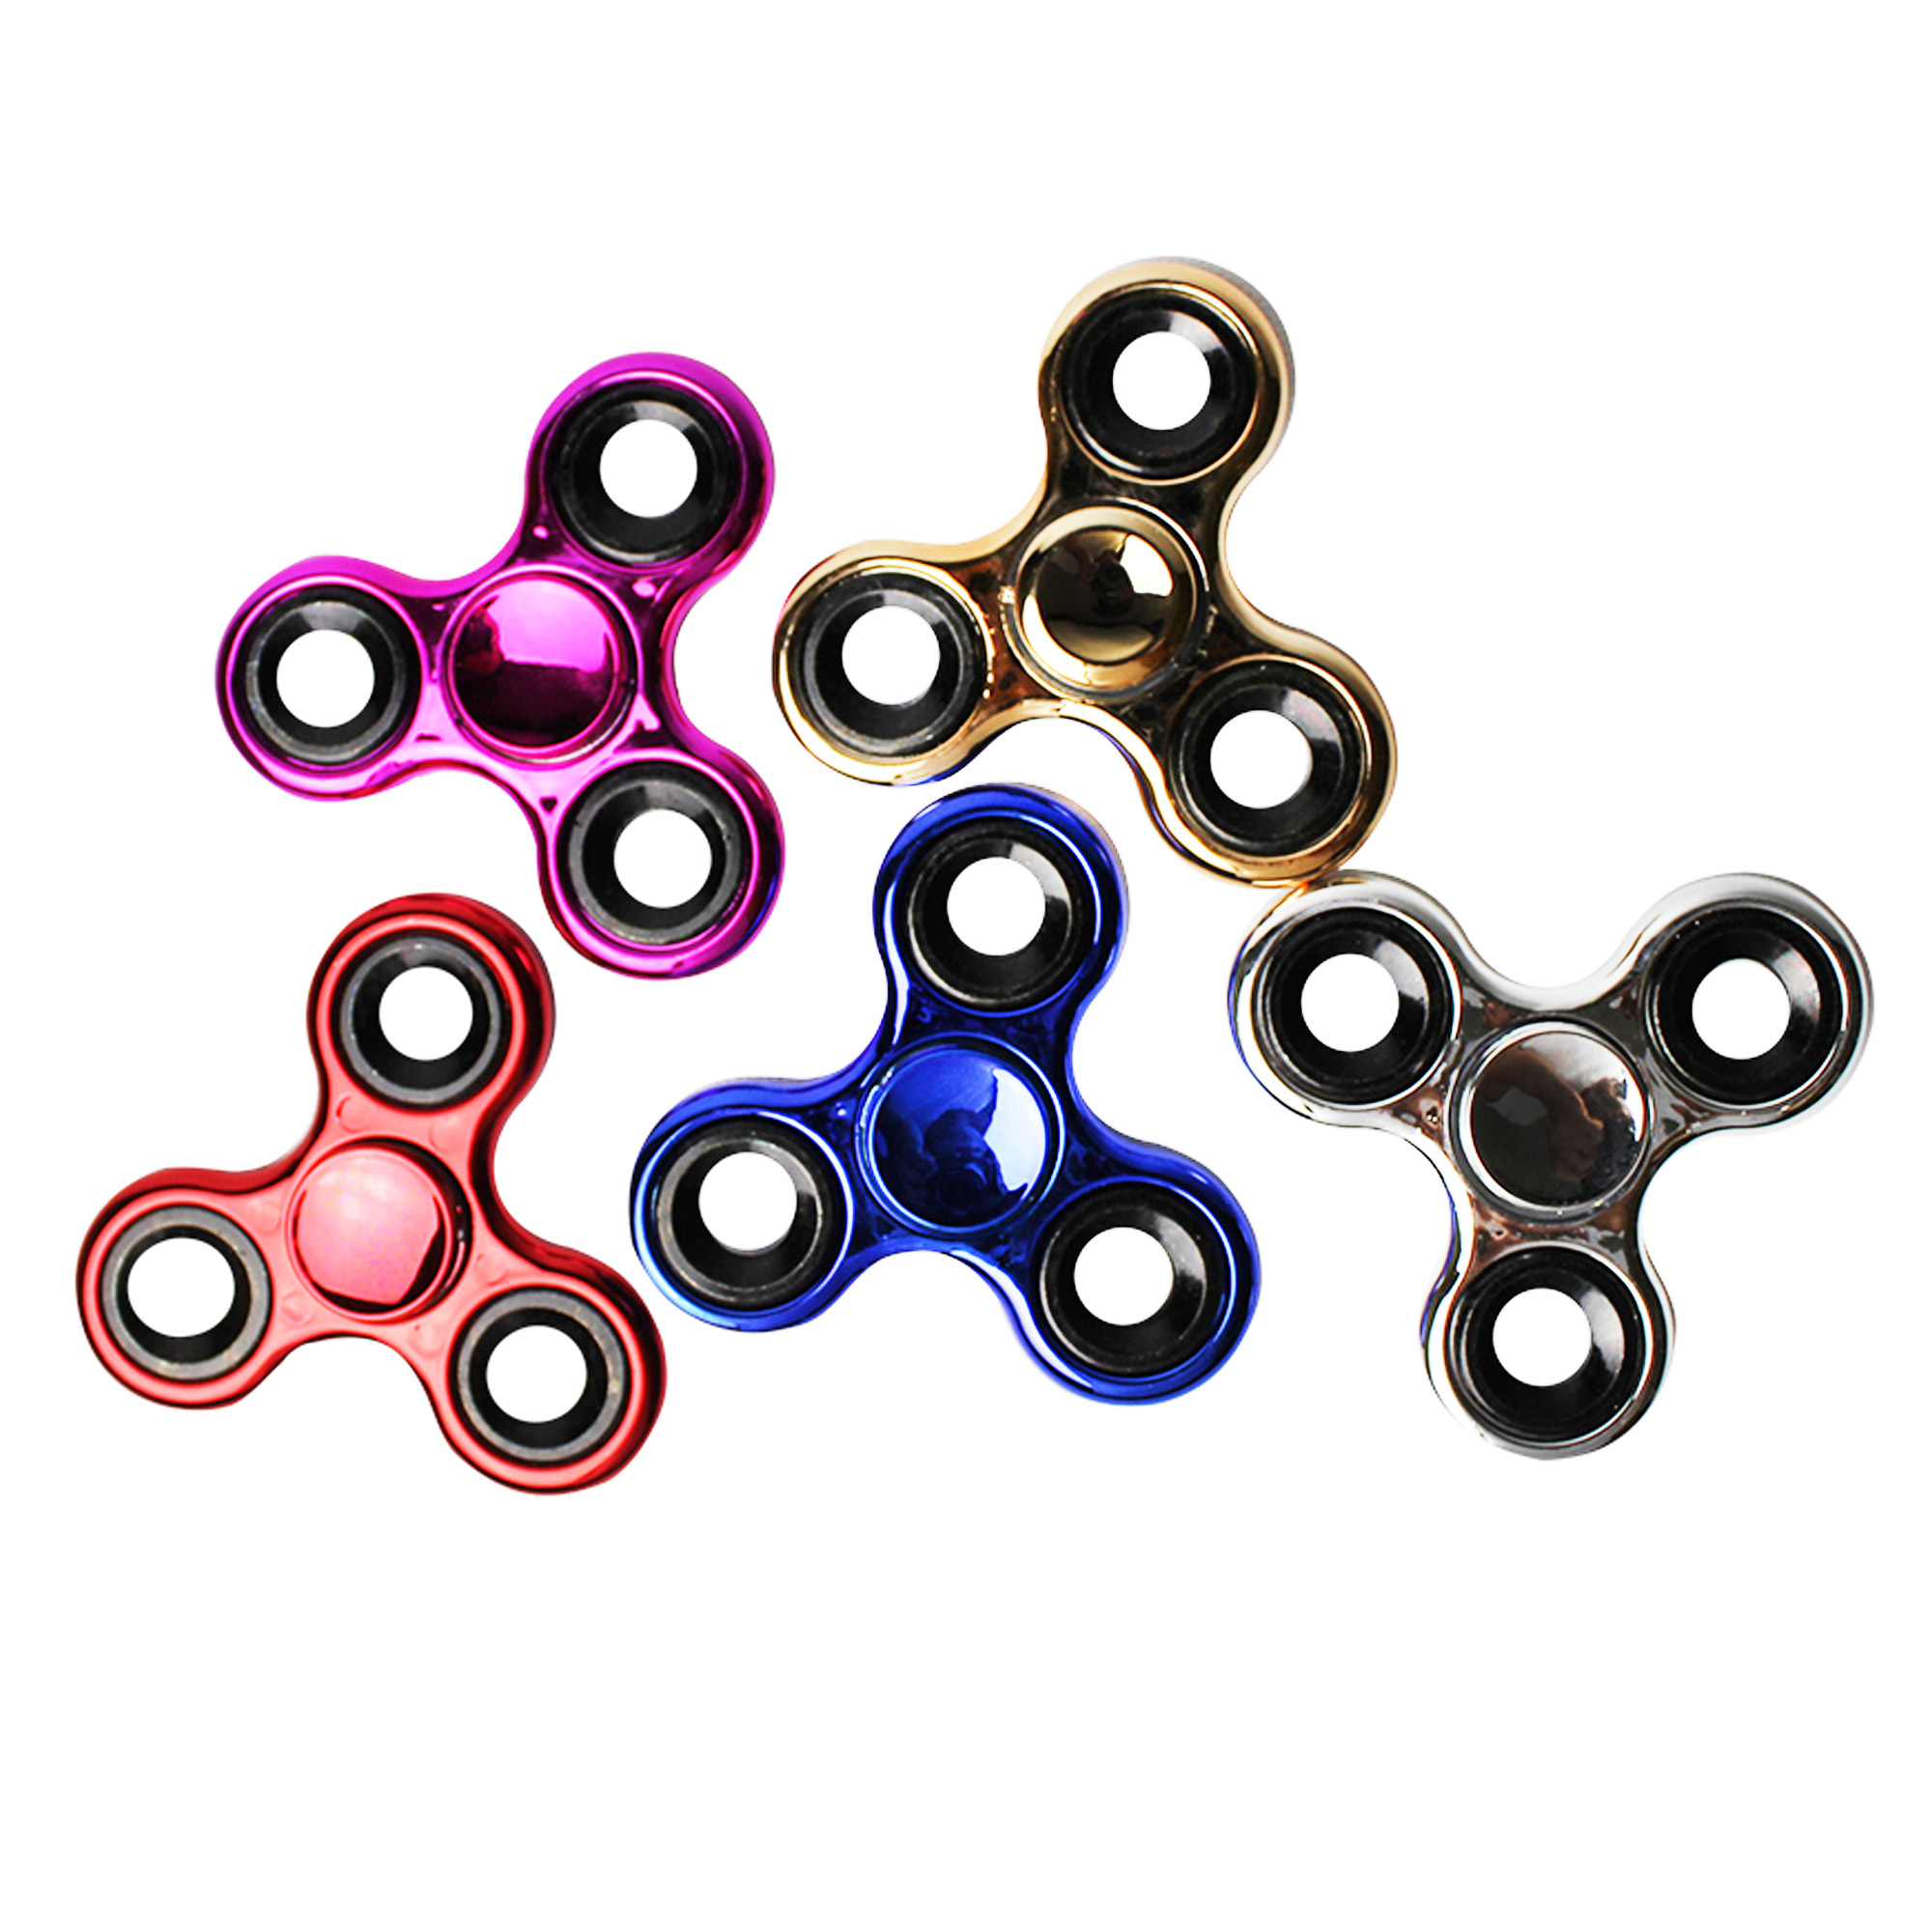 Metallic Fidget Toy Spinners